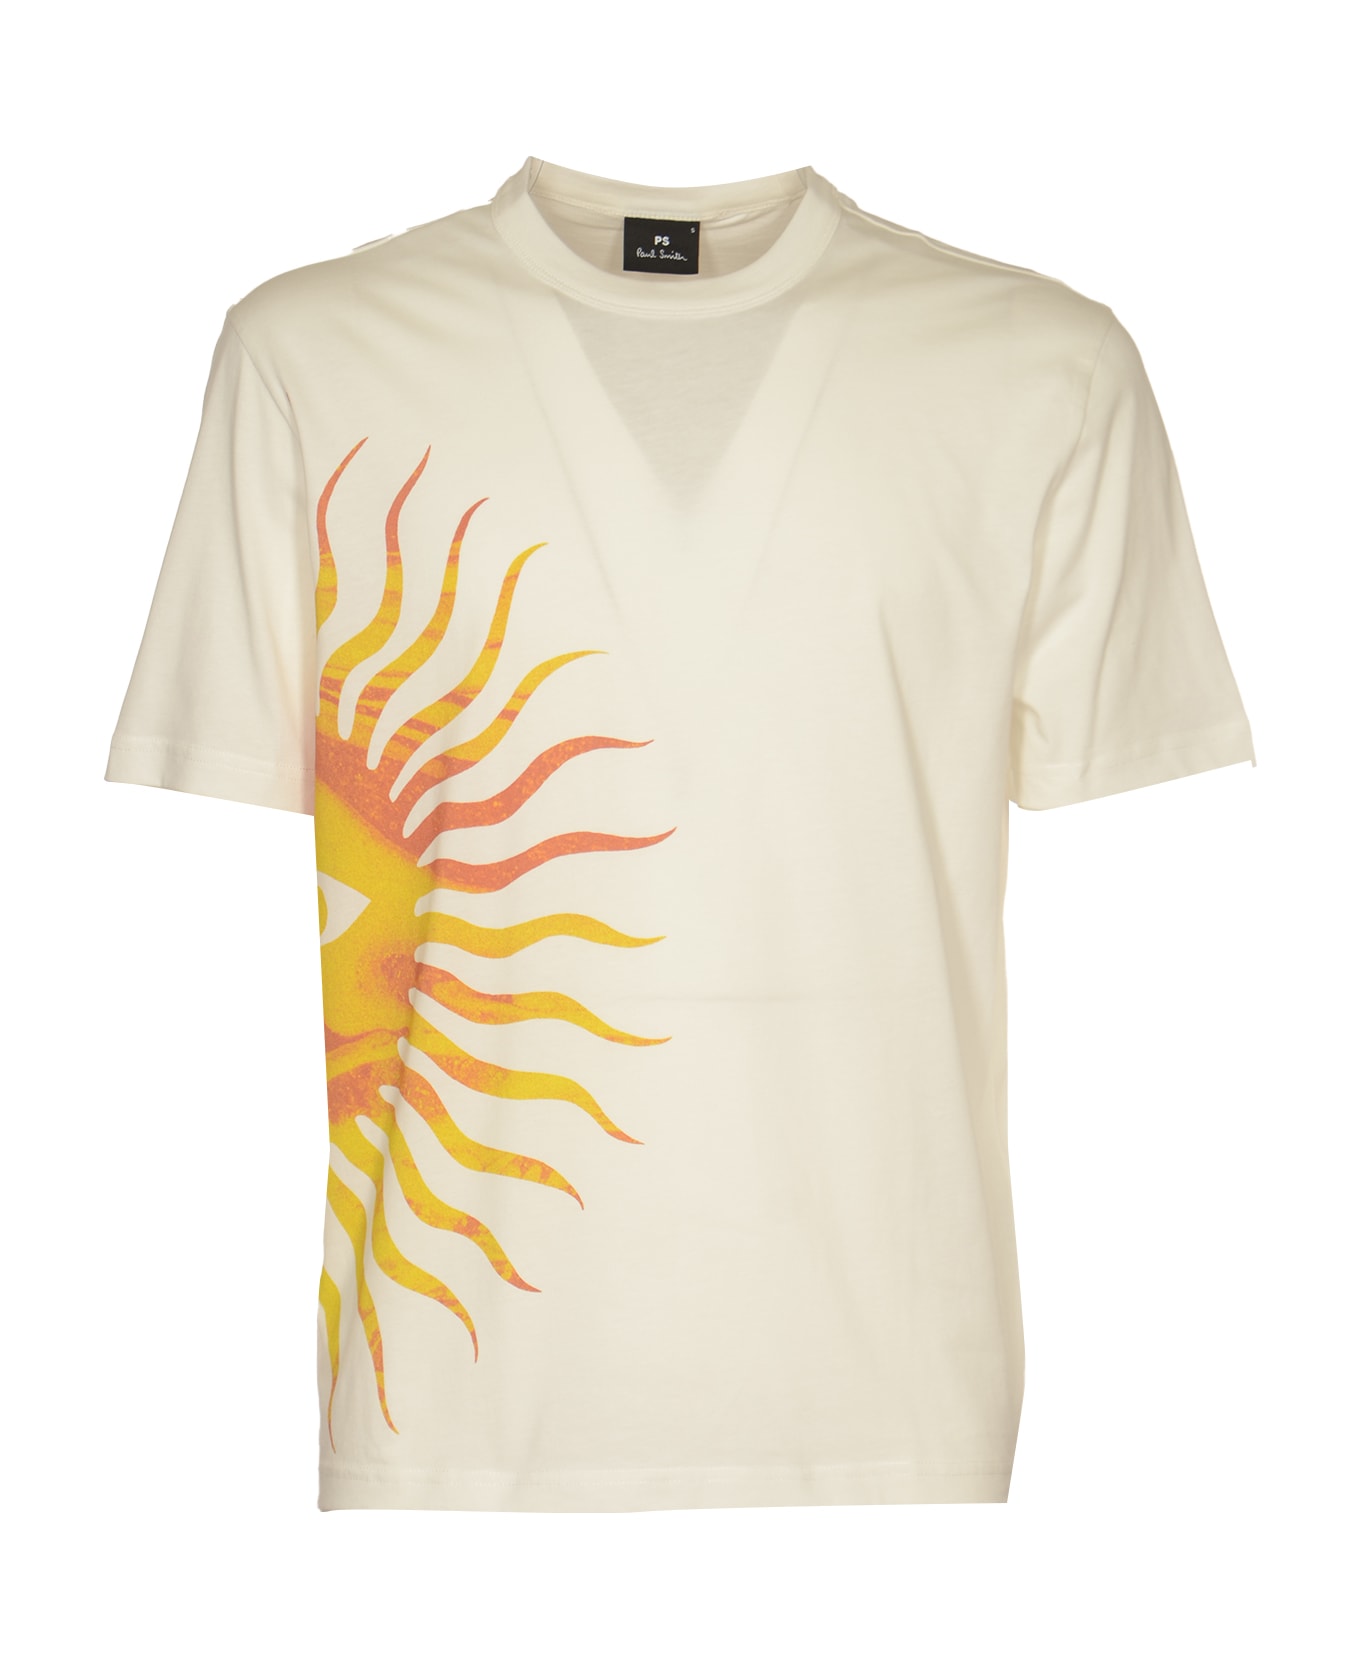 Paul Smith Sunnyside T-shirt - White